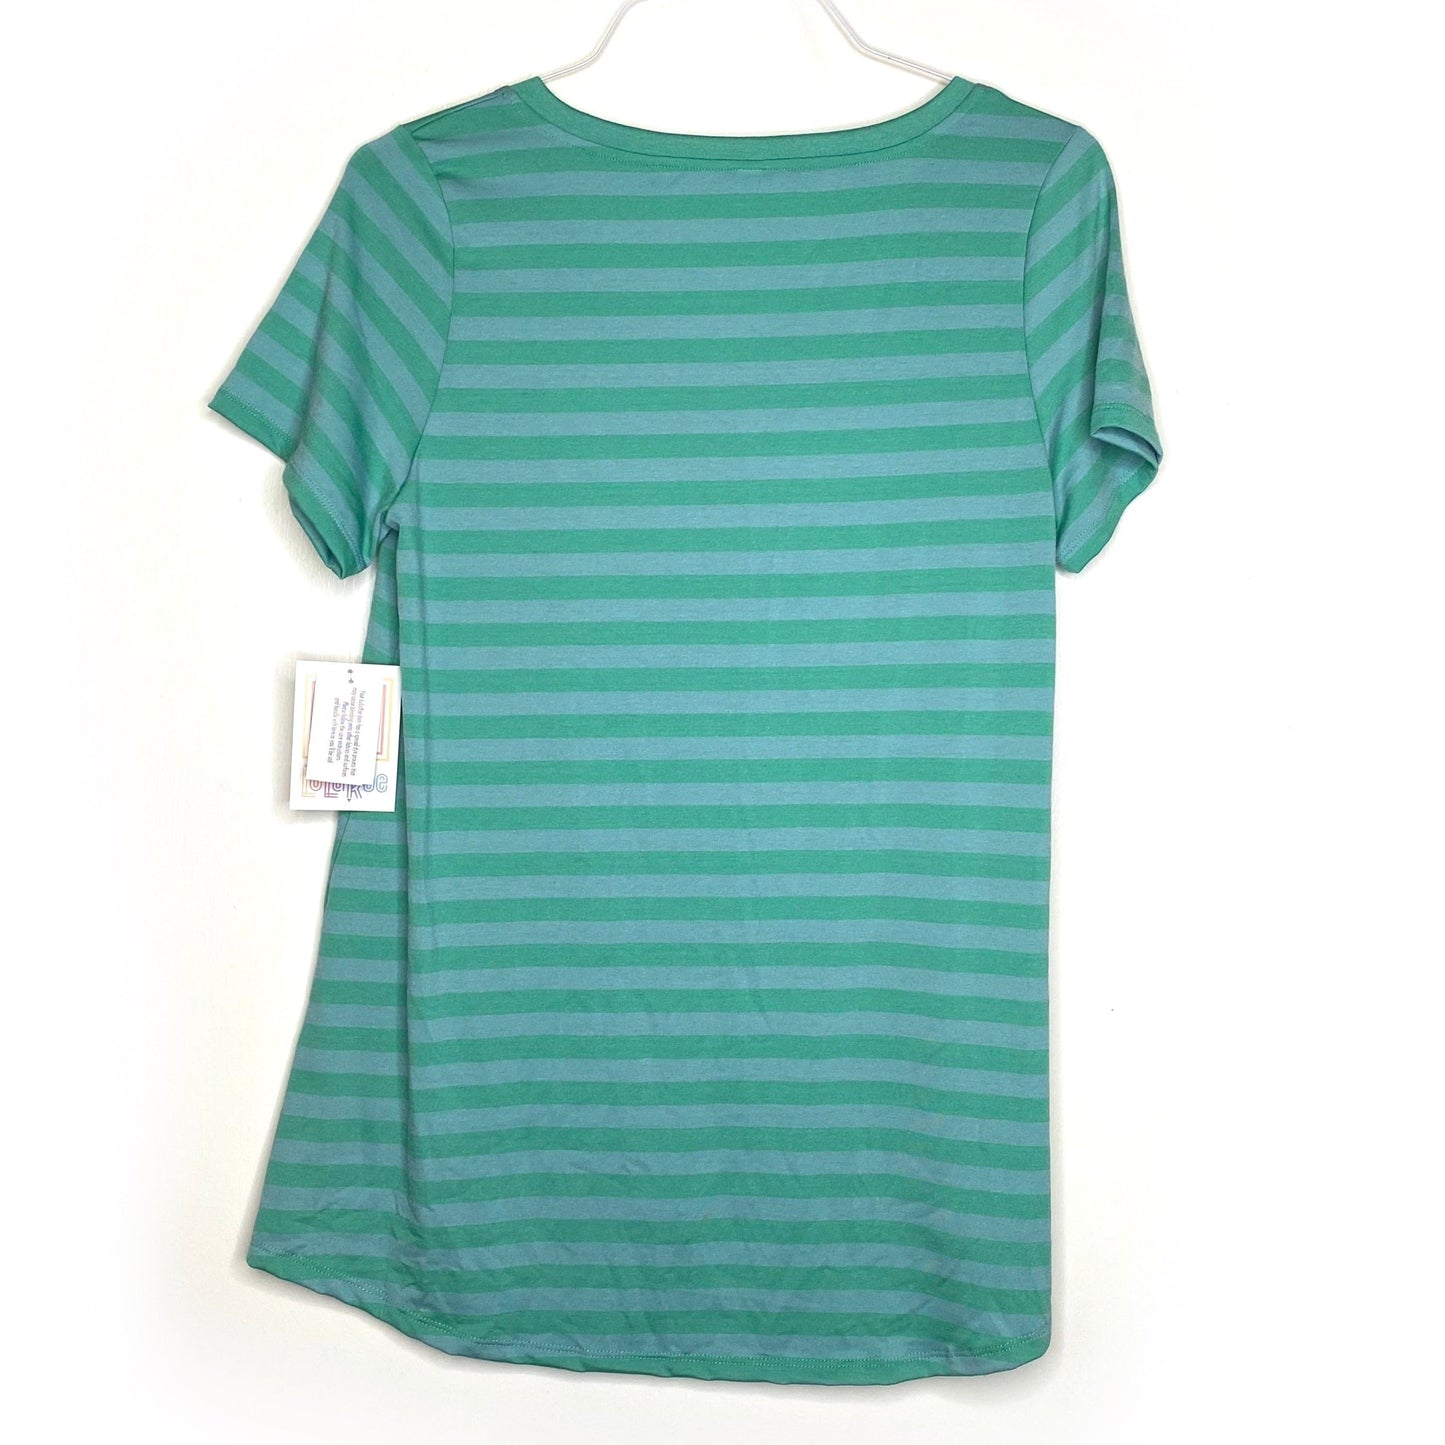 LuLaRoe Womens S Green/Green Christy T Stripes T-Shirt S/s NWT